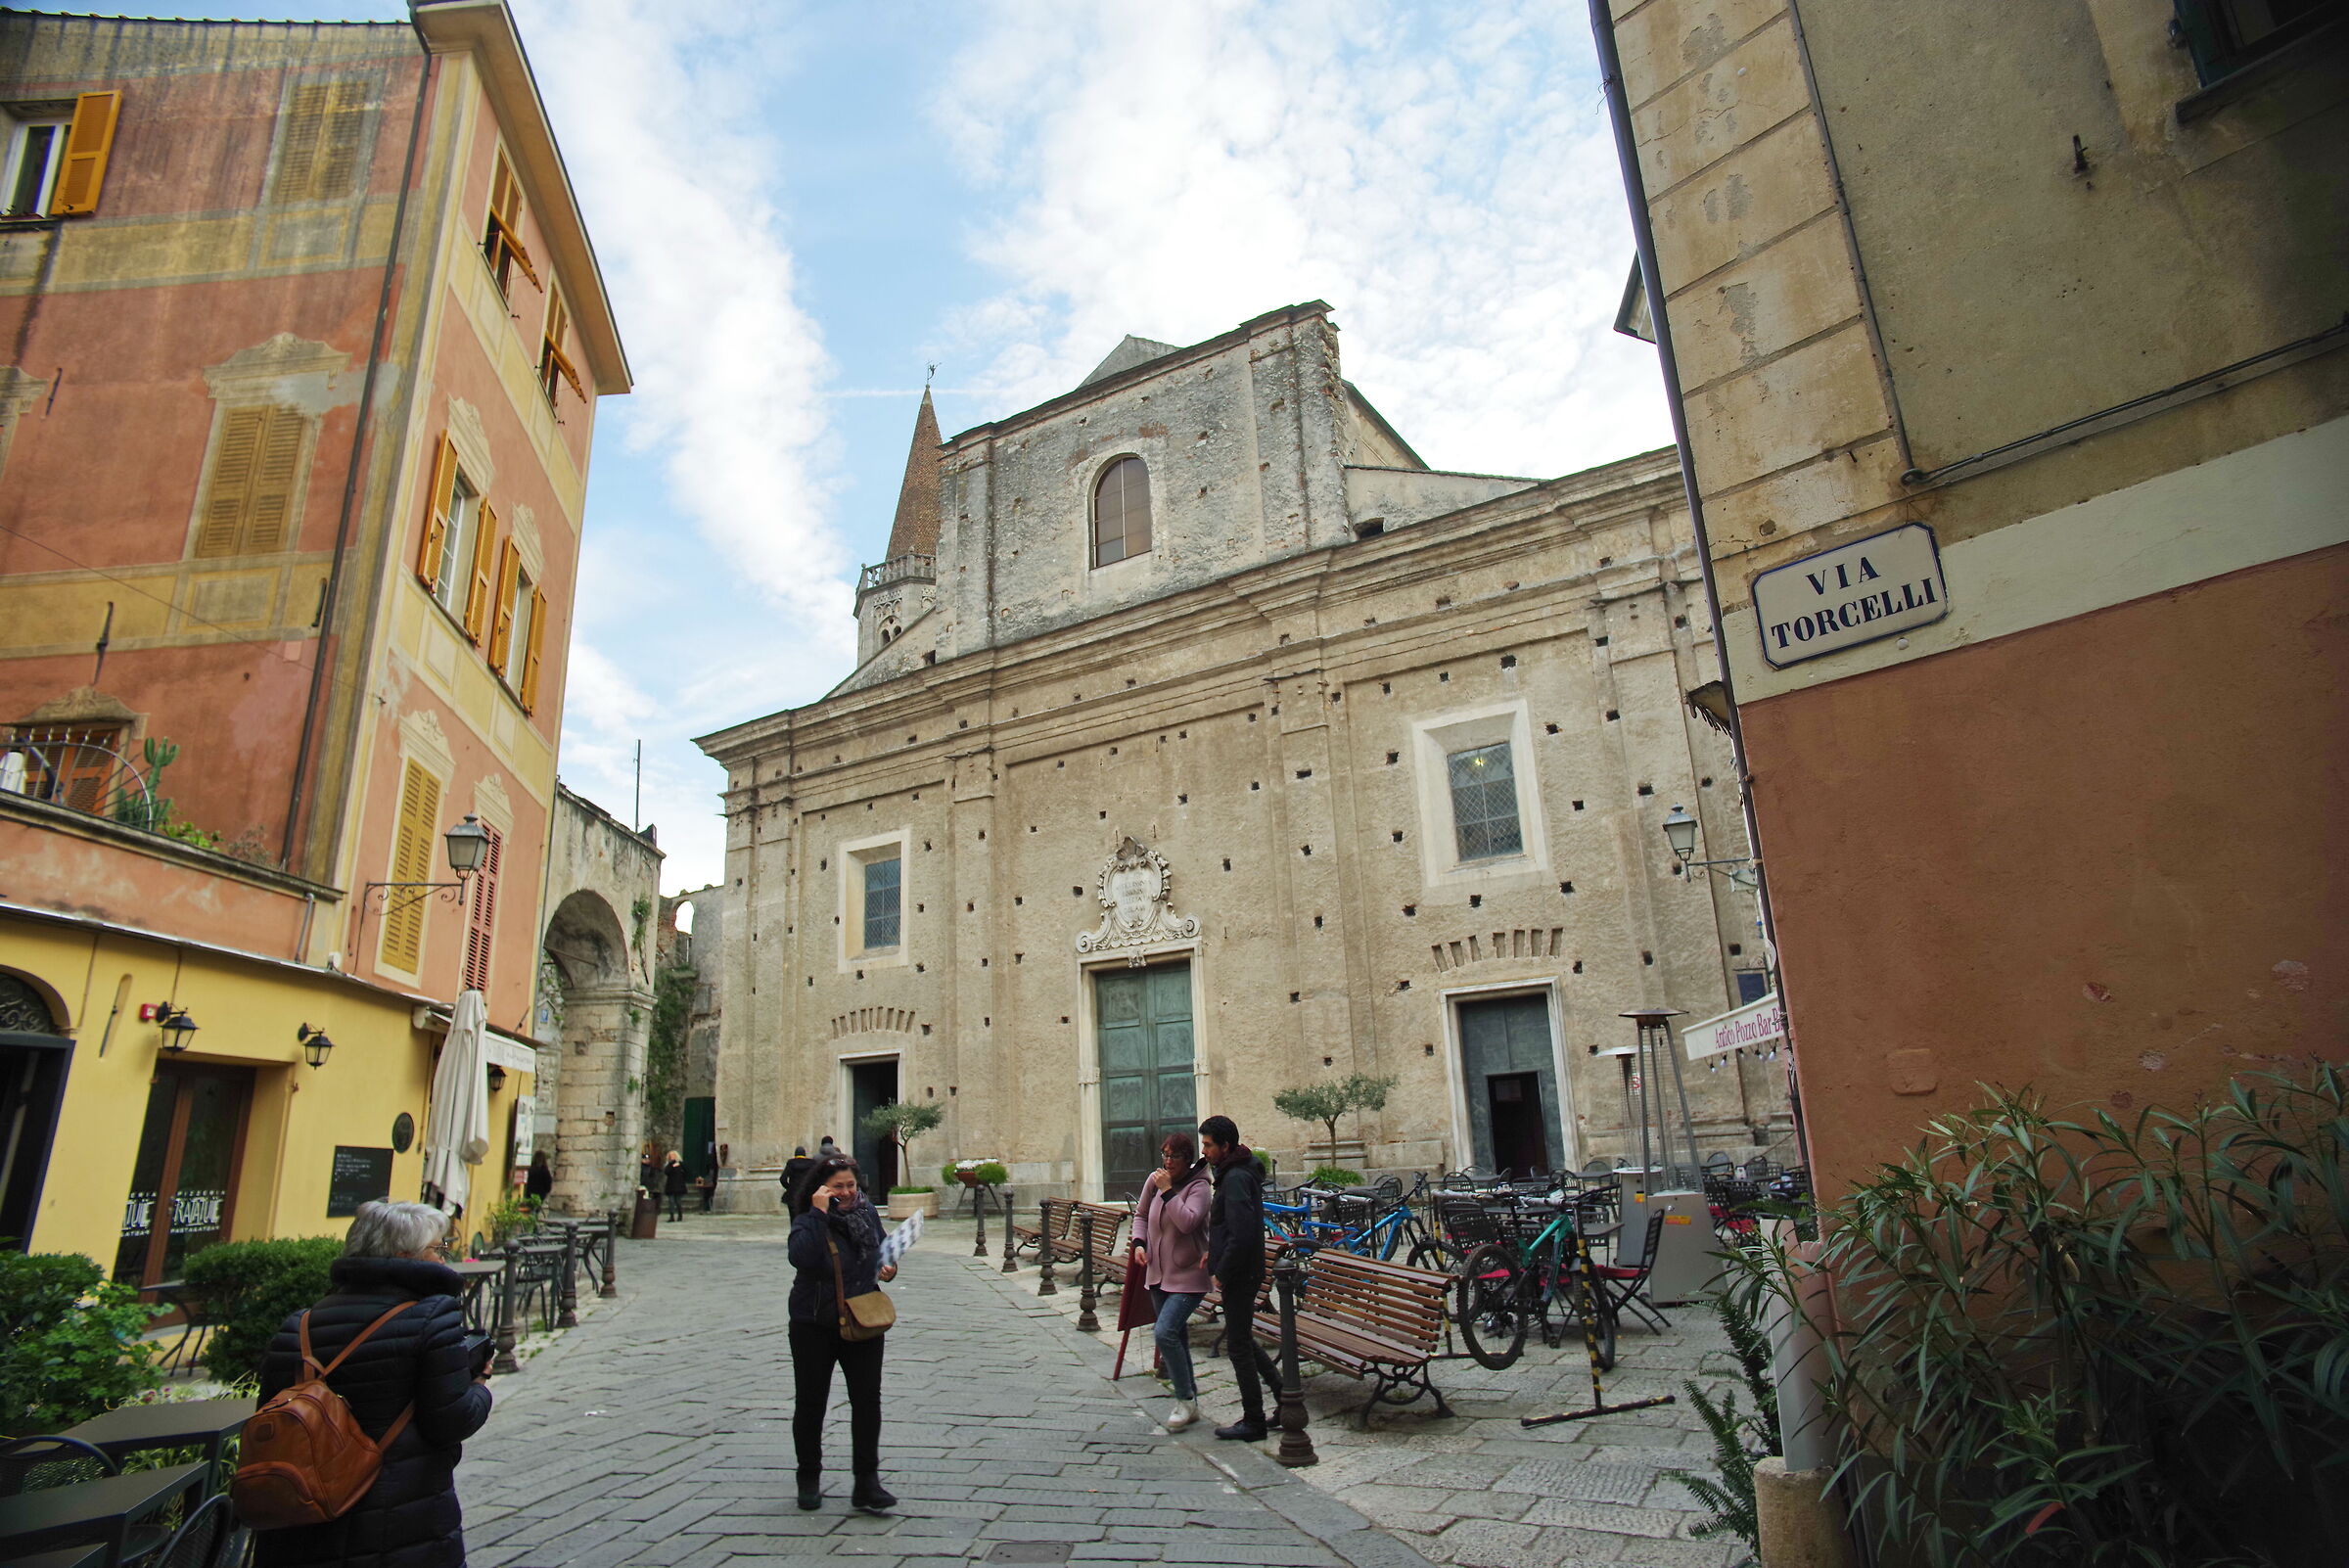 The church of the Borgo....